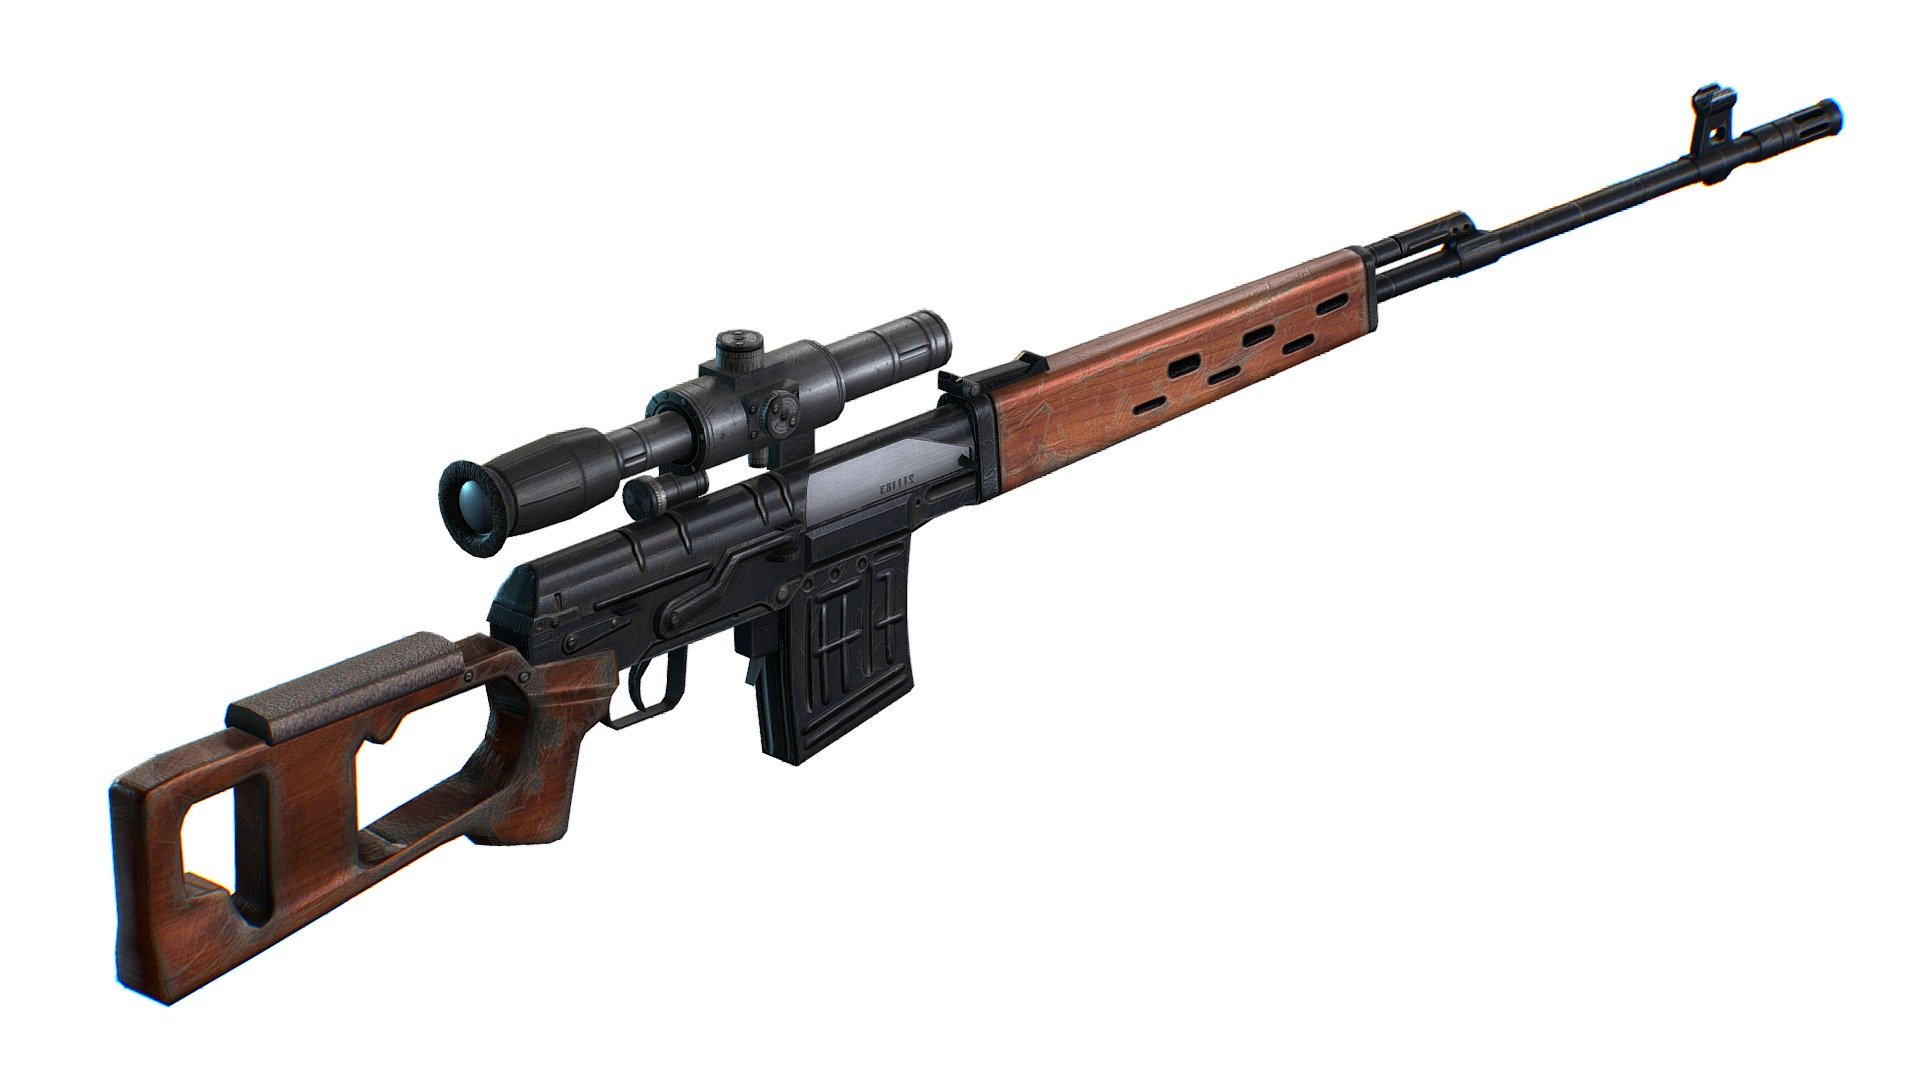 USSR Dragunov Sniper Rifle - SVD - Maya and TGA file included - USSR Dragunov Sniper Rifle - SVD - Buy Royalty Free 3D model by Oleg Shuldiakov (@olegshuldiakov) 3d model